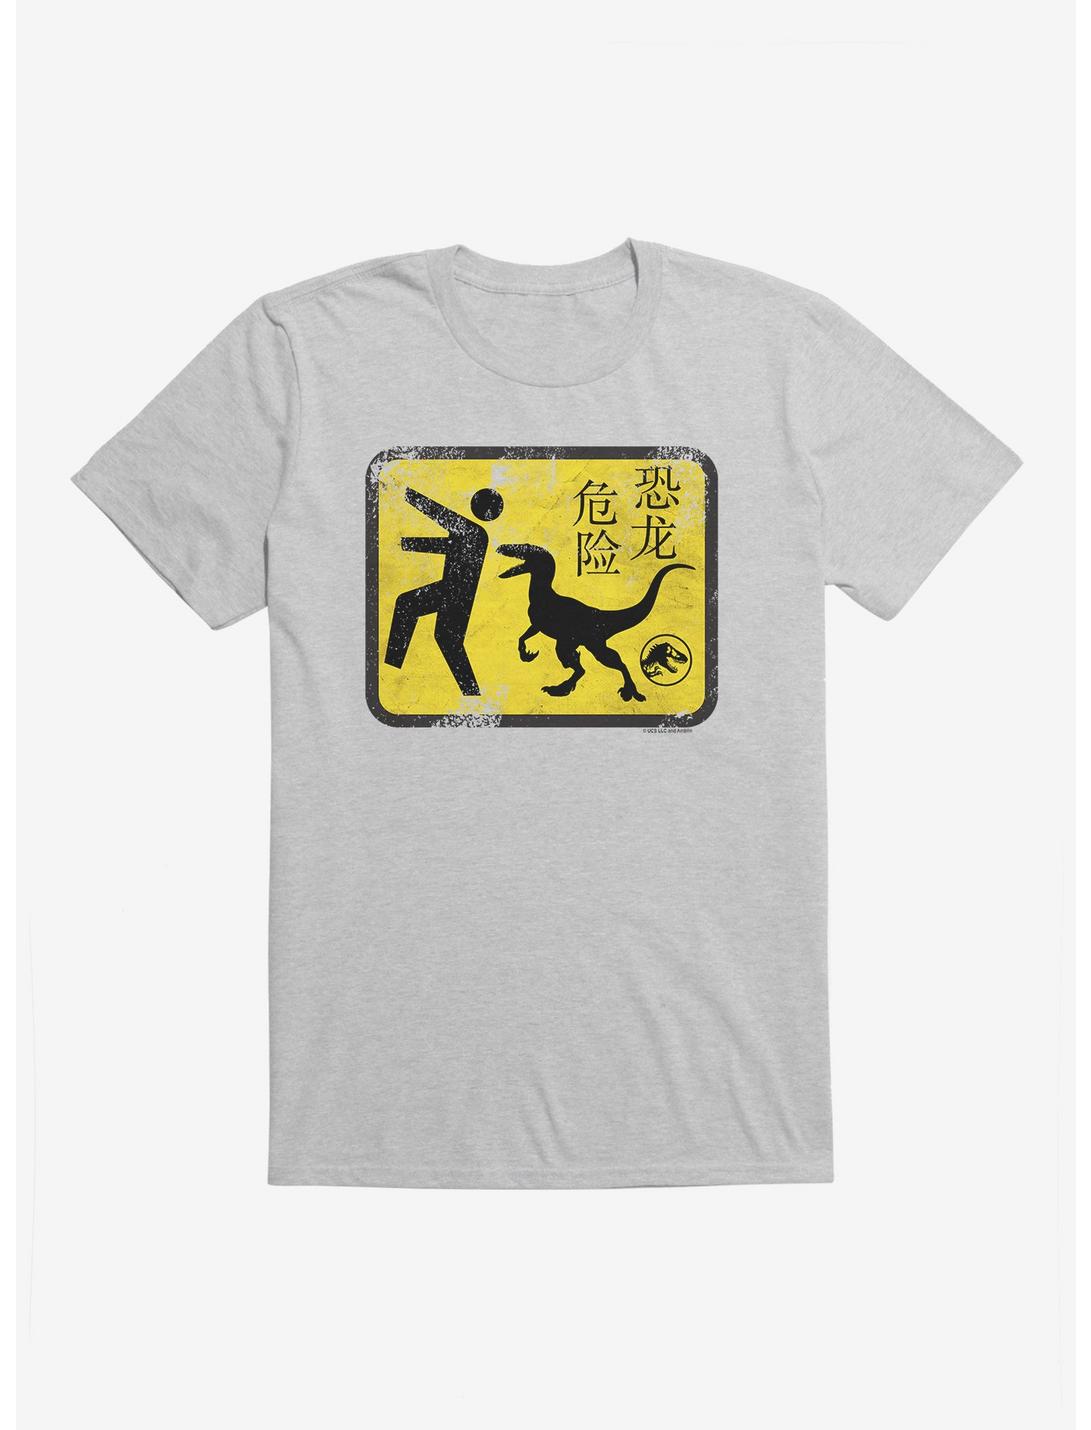 Jurassic World Dominion Caution Sign Yellow T-Shirt, HEATHER GREY, hi-res